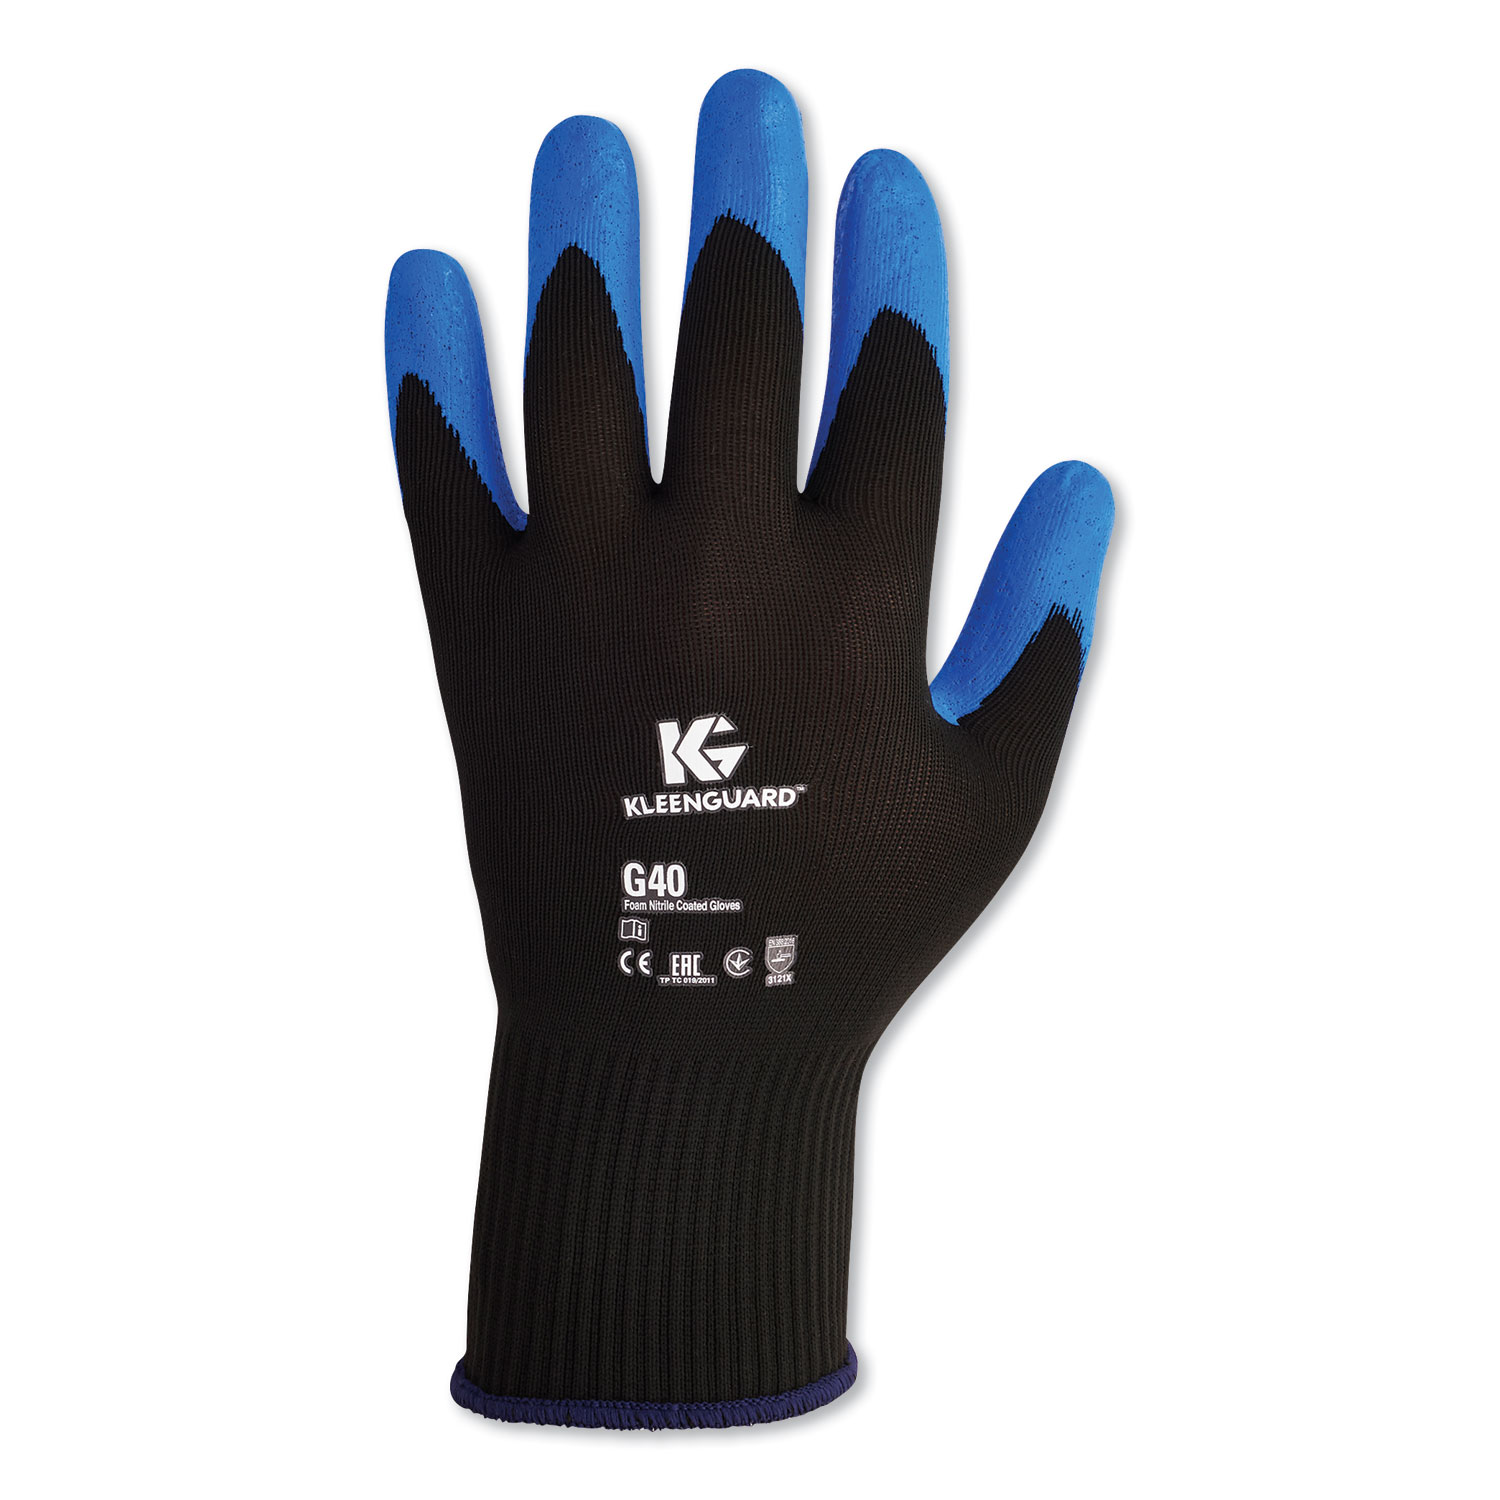  KleenGuard 40228 G40 Nitrile Coated Gloves, 250 mm Length, X-Large/Size 10, Blue, 12 Pairs (KCC40228) 